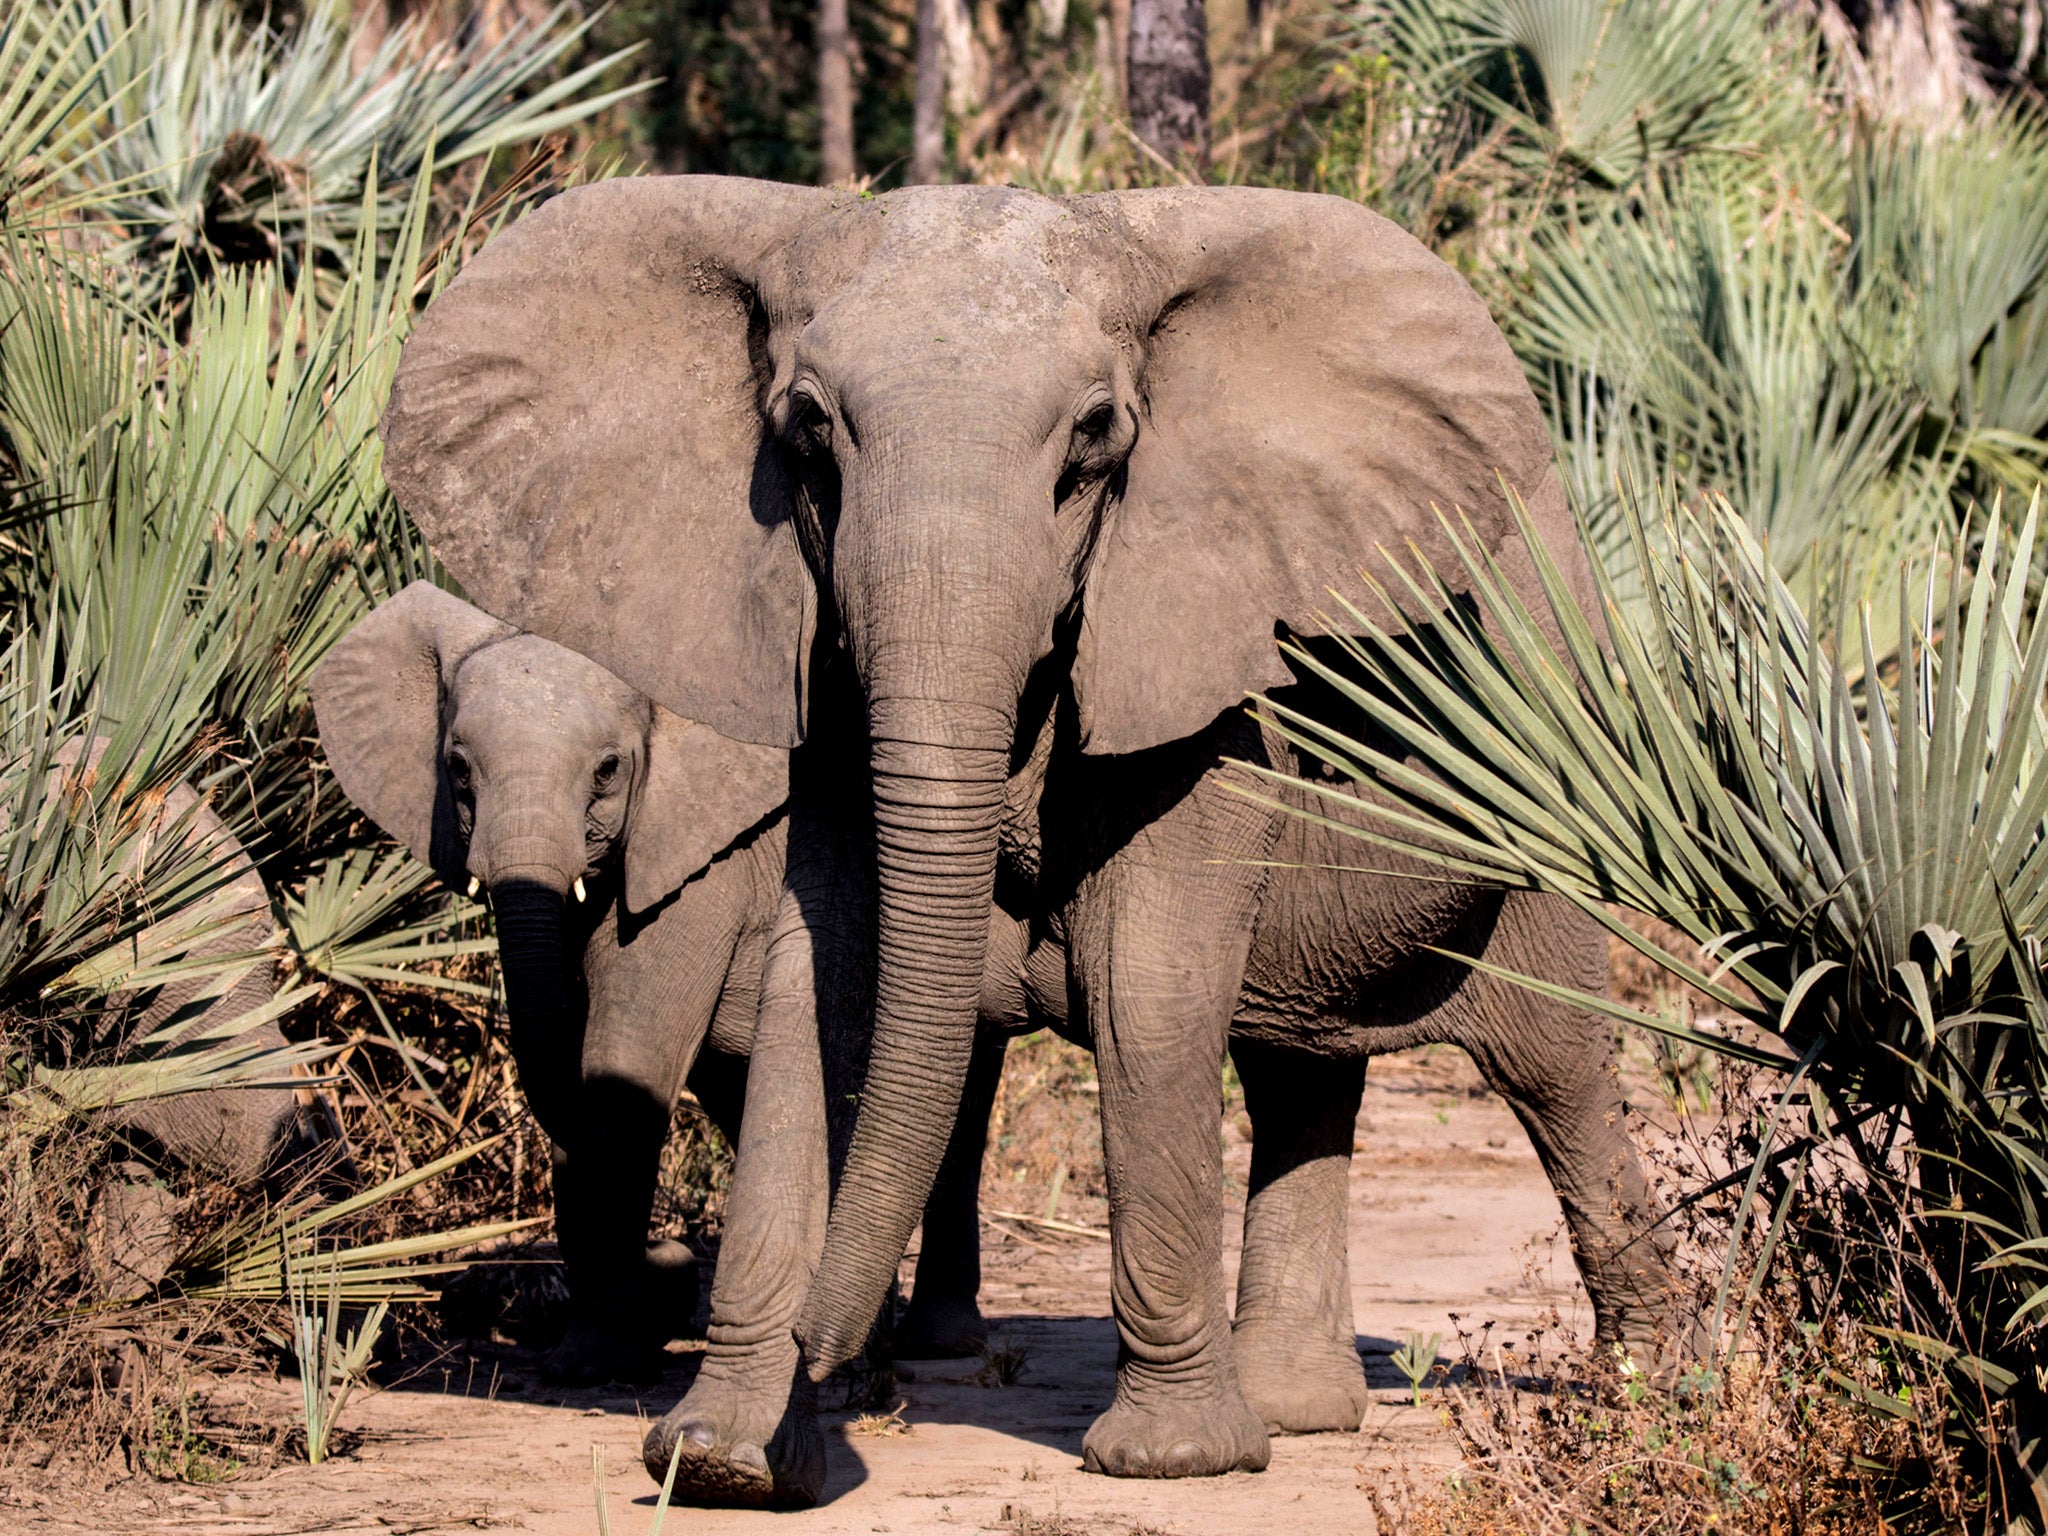 Researchers studied the tuskless elephants of Gorongosa National Park